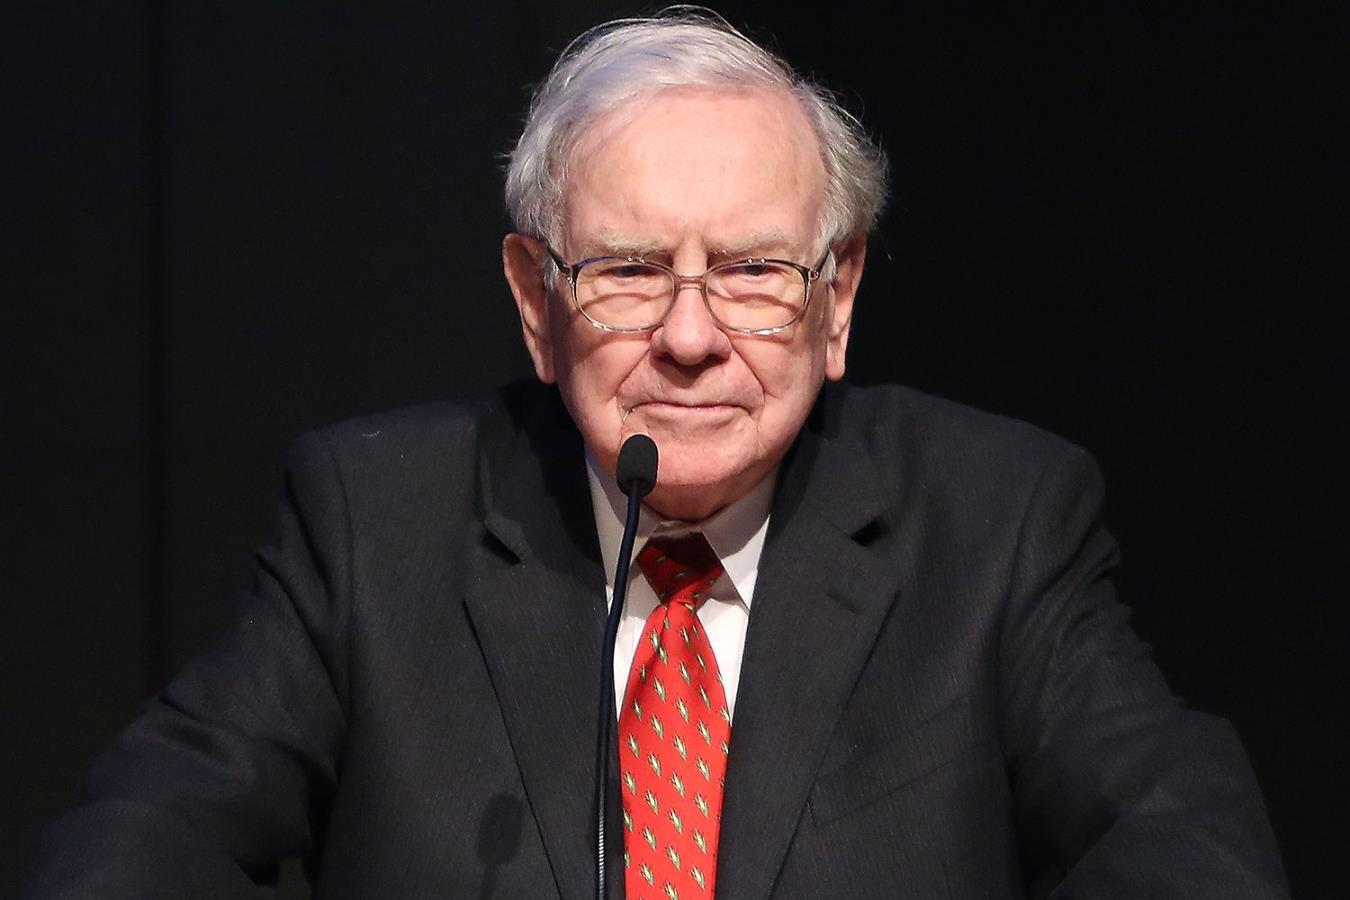 Berkshire Hathaway: Buffett risponde agli azionisti, cosa aspettarsi